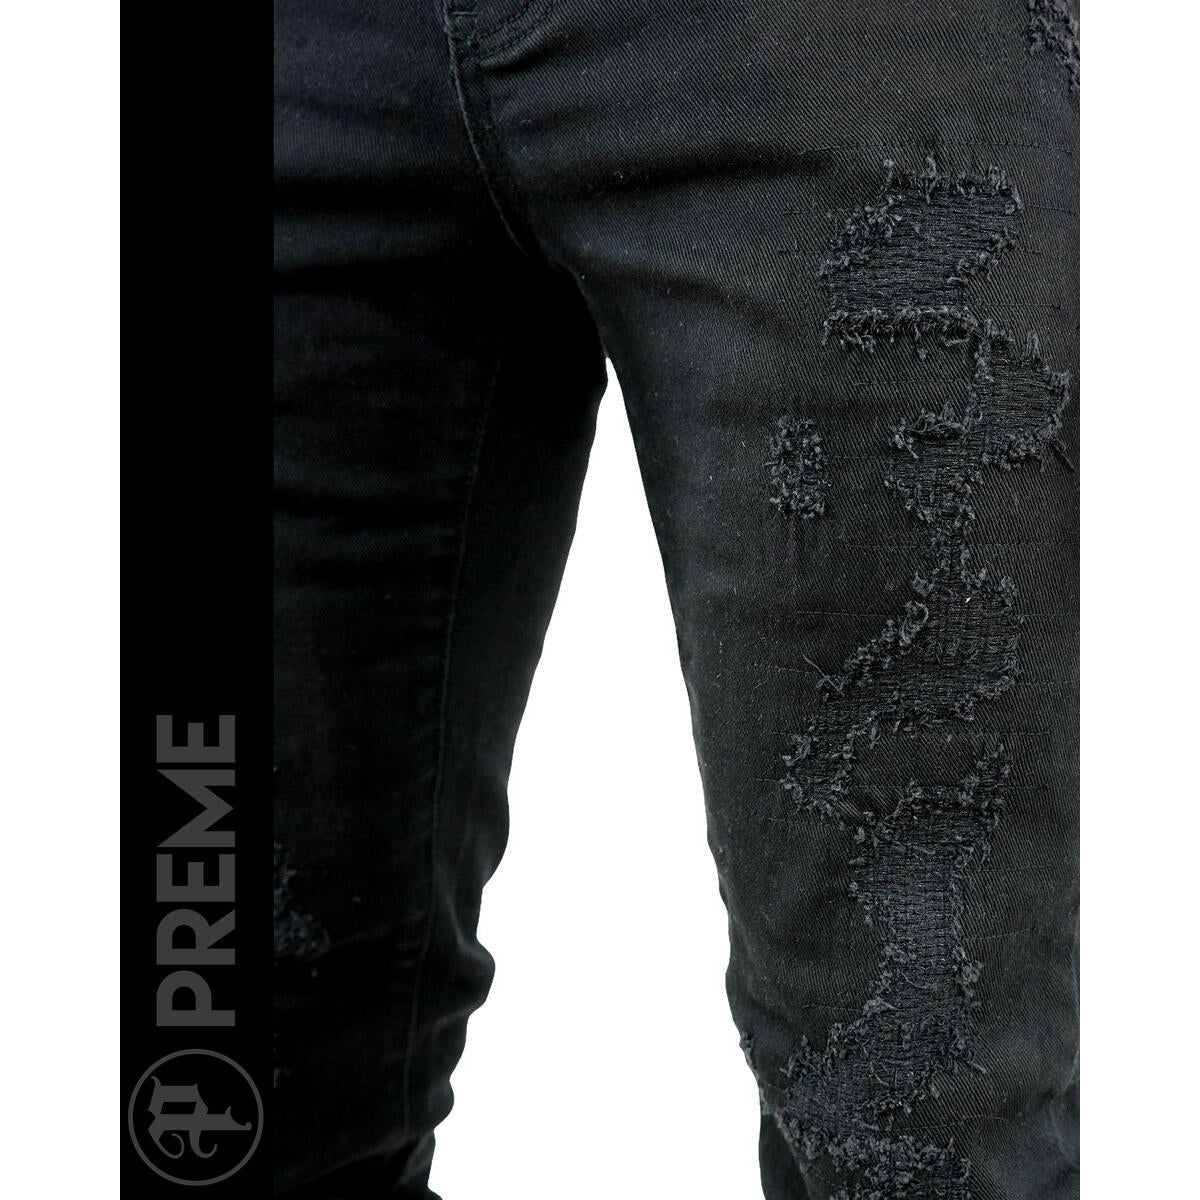 PREME Black Buffalo Novelty Jeans w/Tears (PR-WB-198)